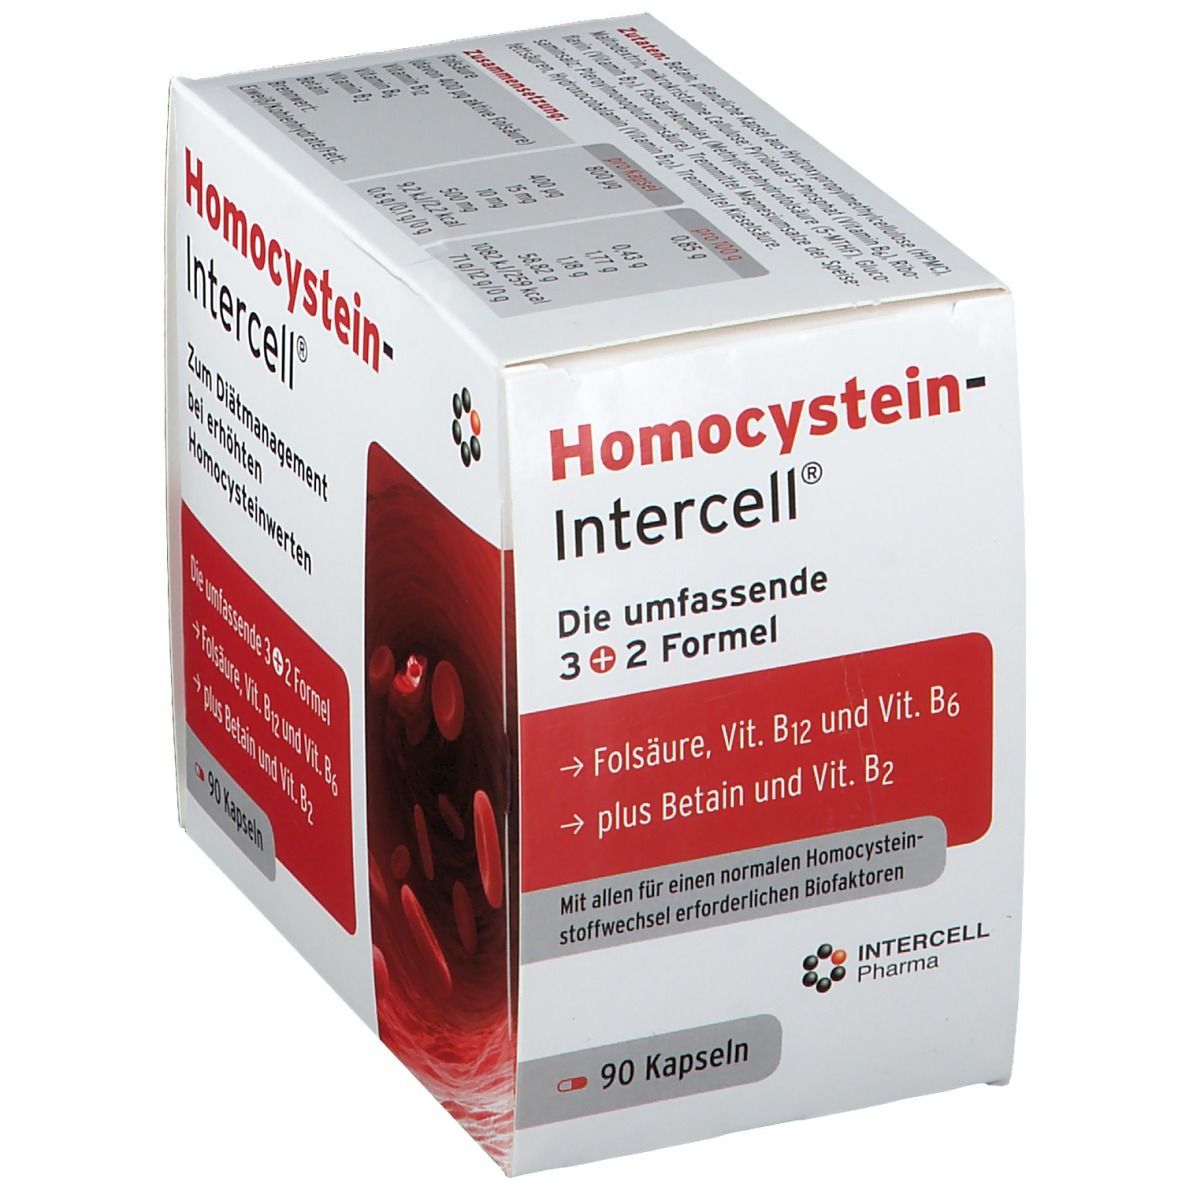 Homocystein-Intercell